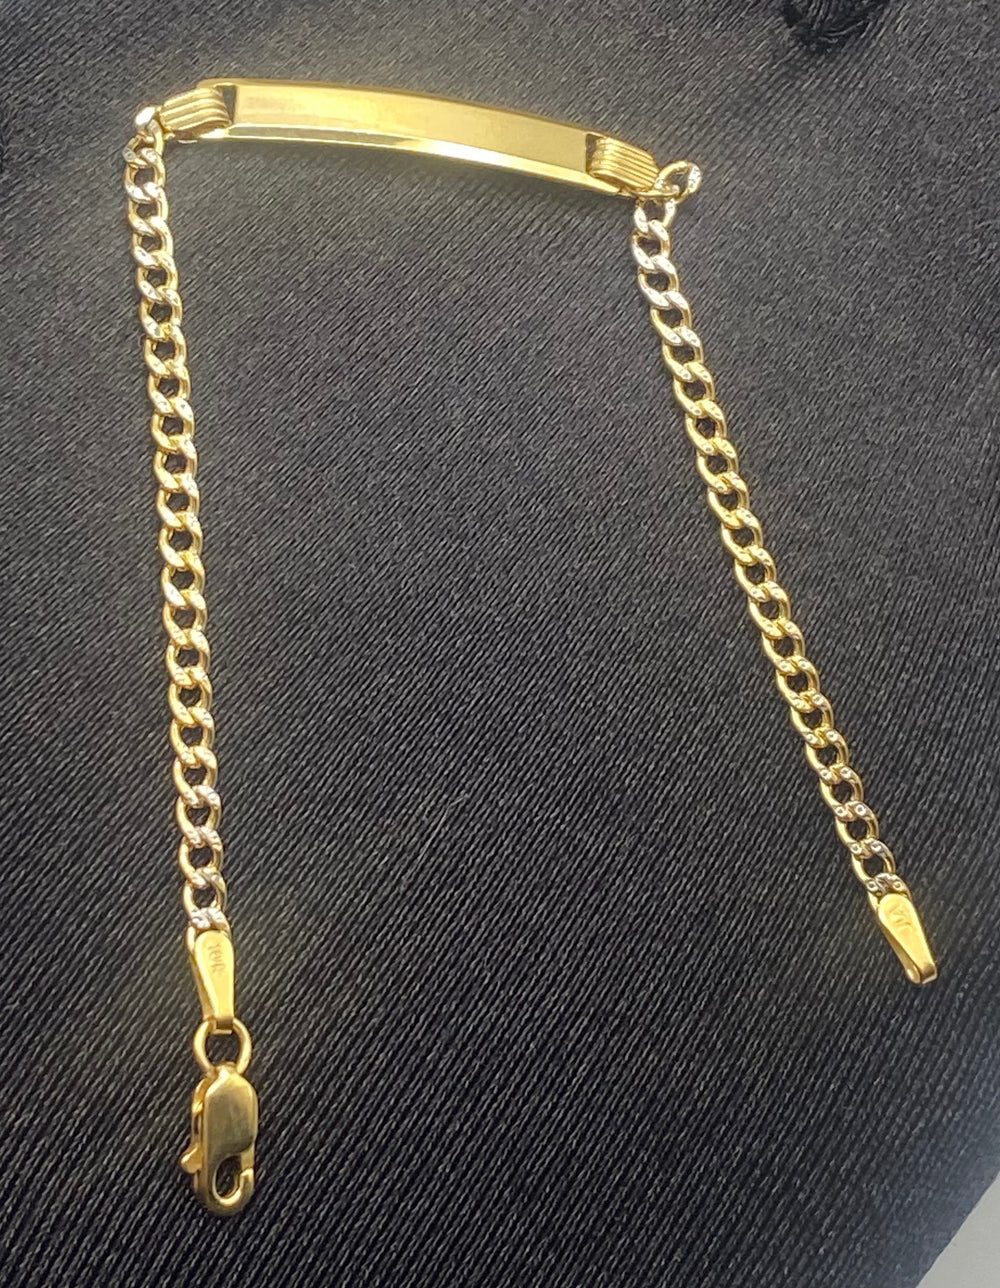 10 KT Gold Baby Bracelet With Diamond Cuts